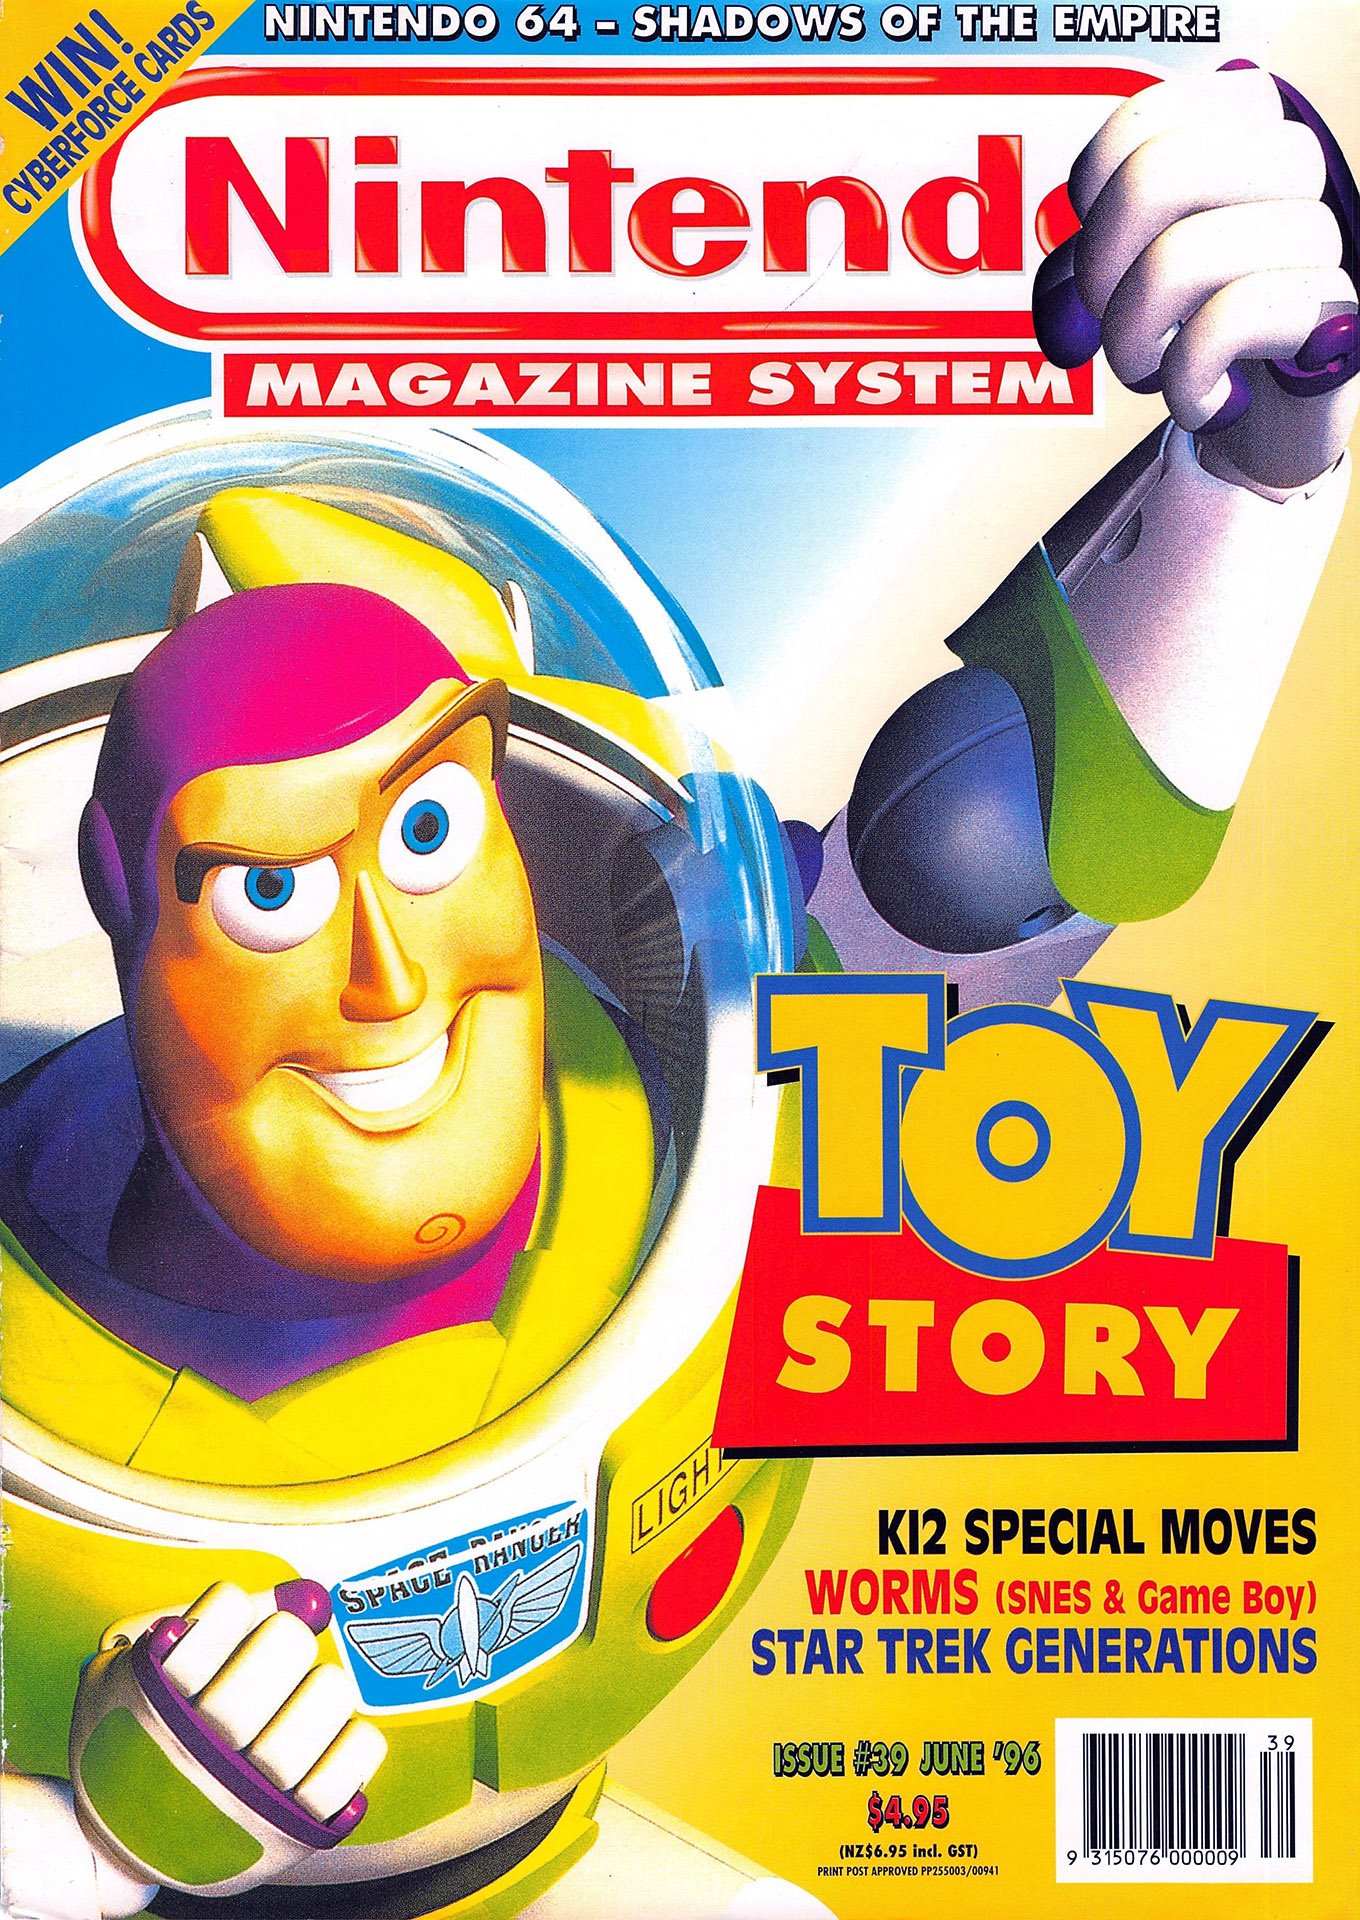 Nintendo Magazine System (AUS) 039 (June 1996)